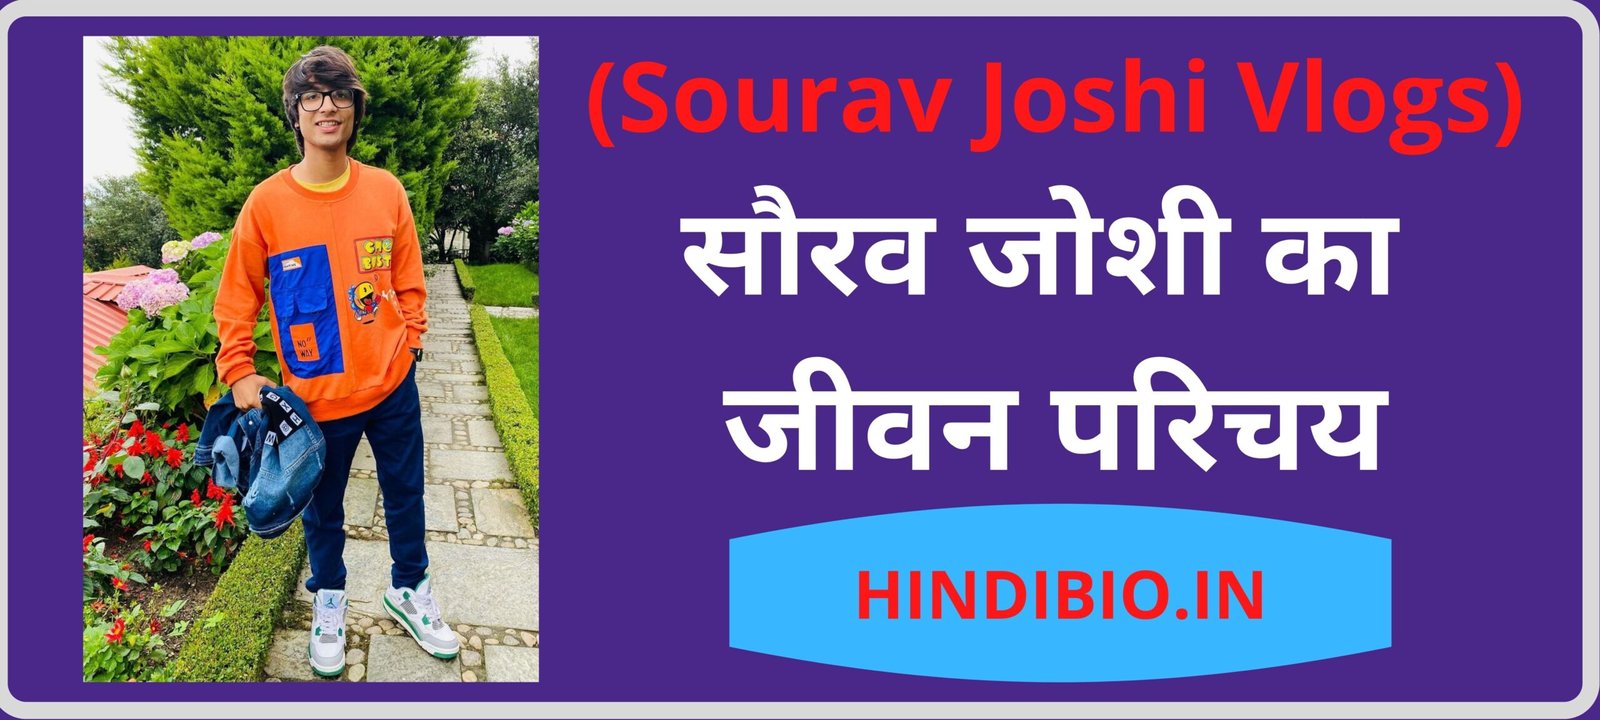 Sourav Joshi